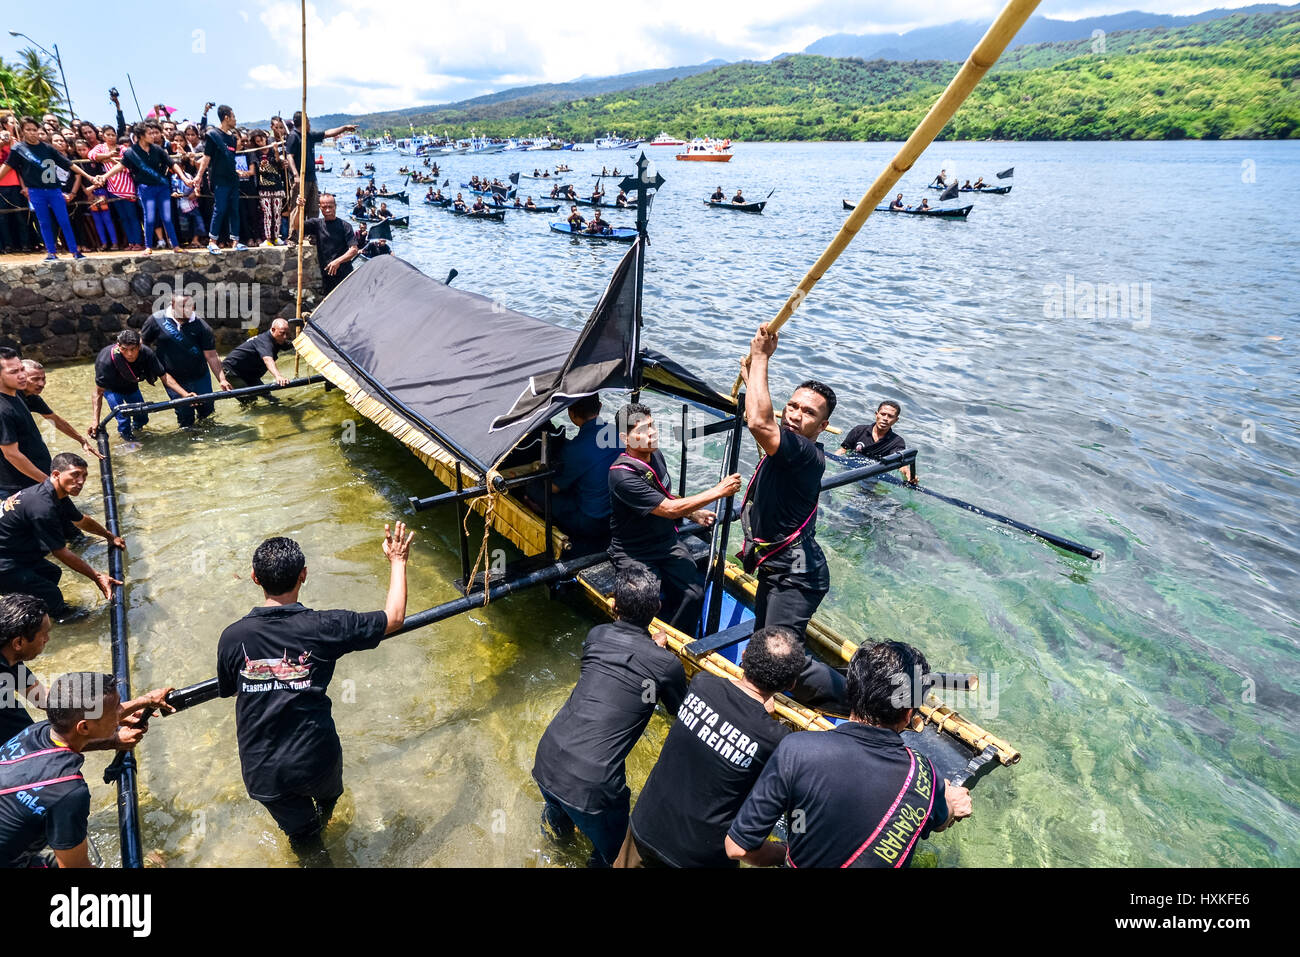 Tuan Meninu Kapelle Gemeinde Beginn der Seeprozession während Semana Santa Feier in Larantuka, Indonesien. Stockfoto